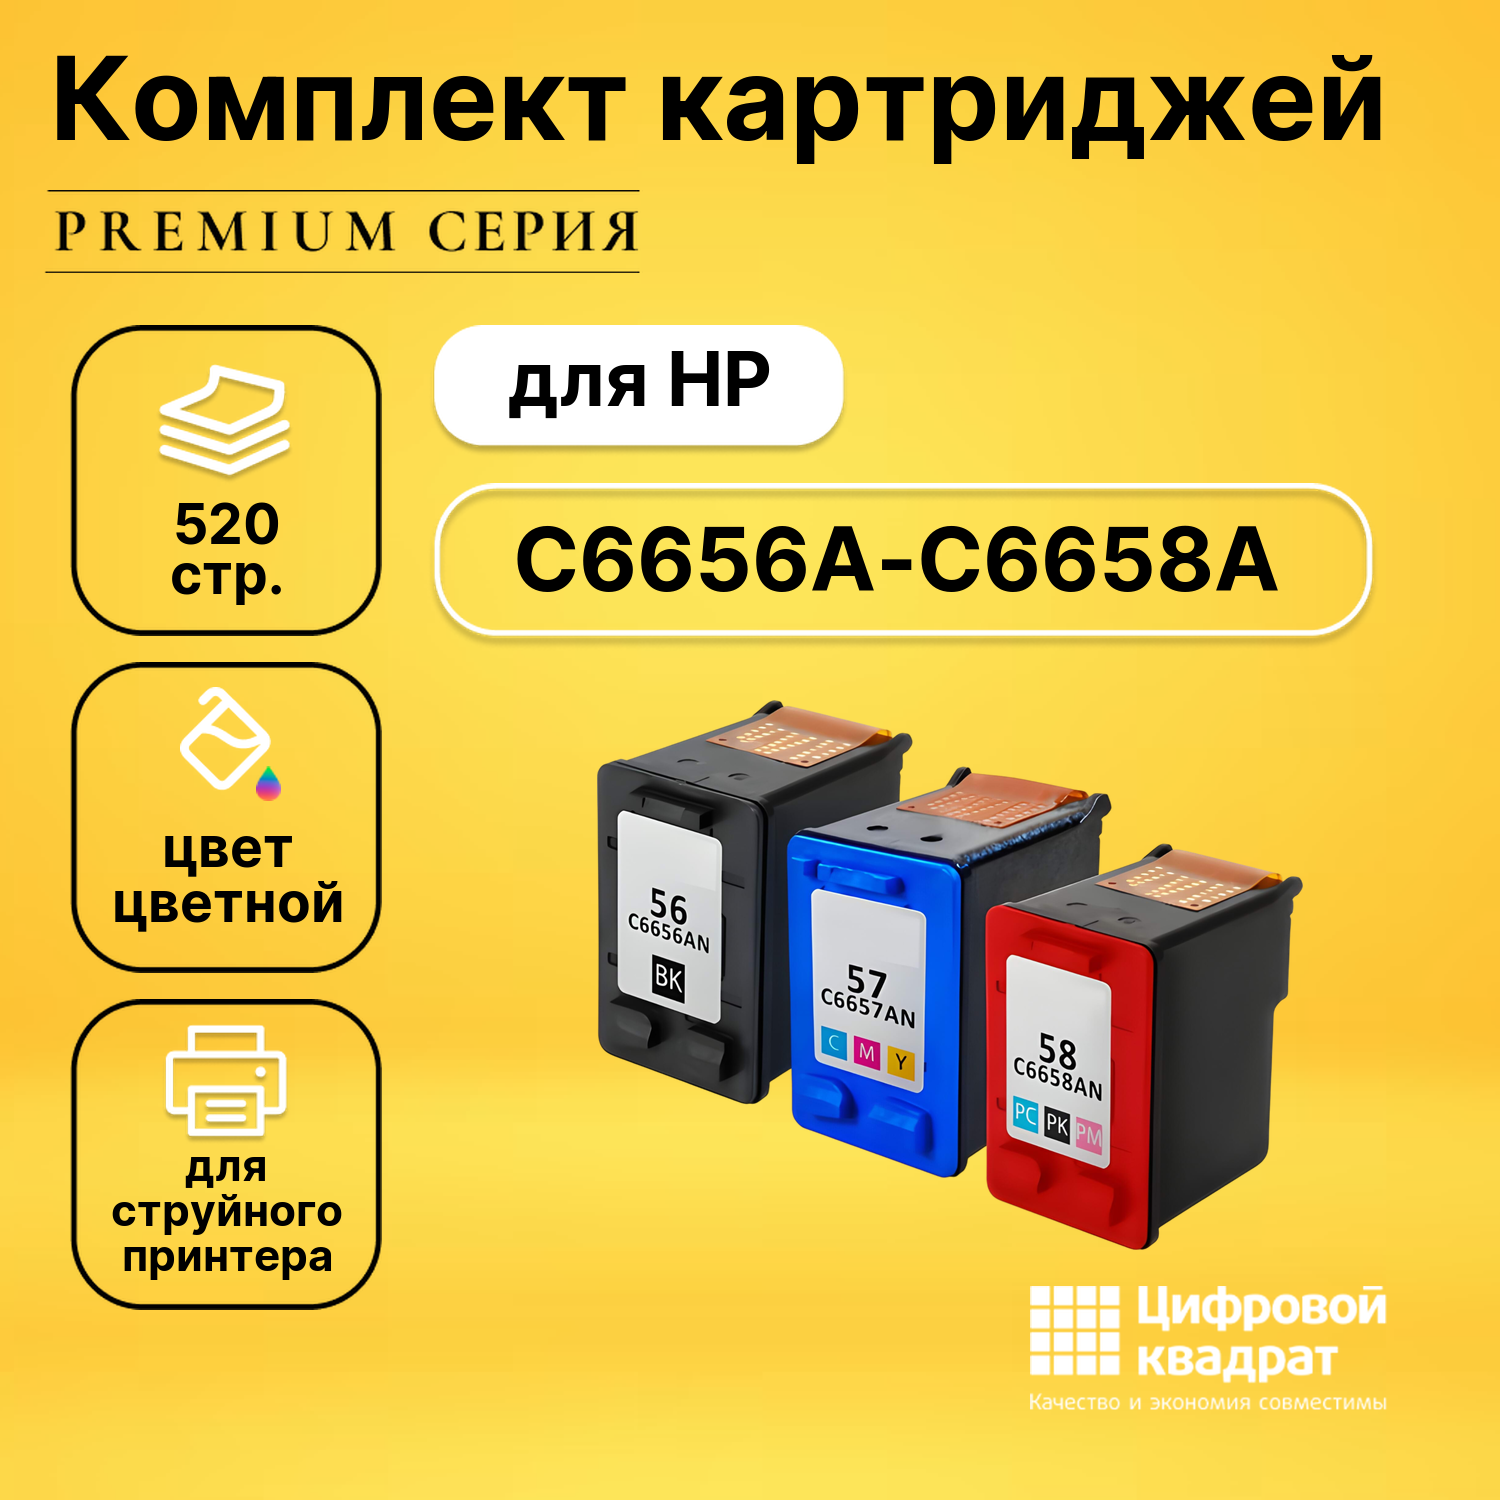 Набор картриджей DS №56-57-58 HP C6656A-C6658A совместимый